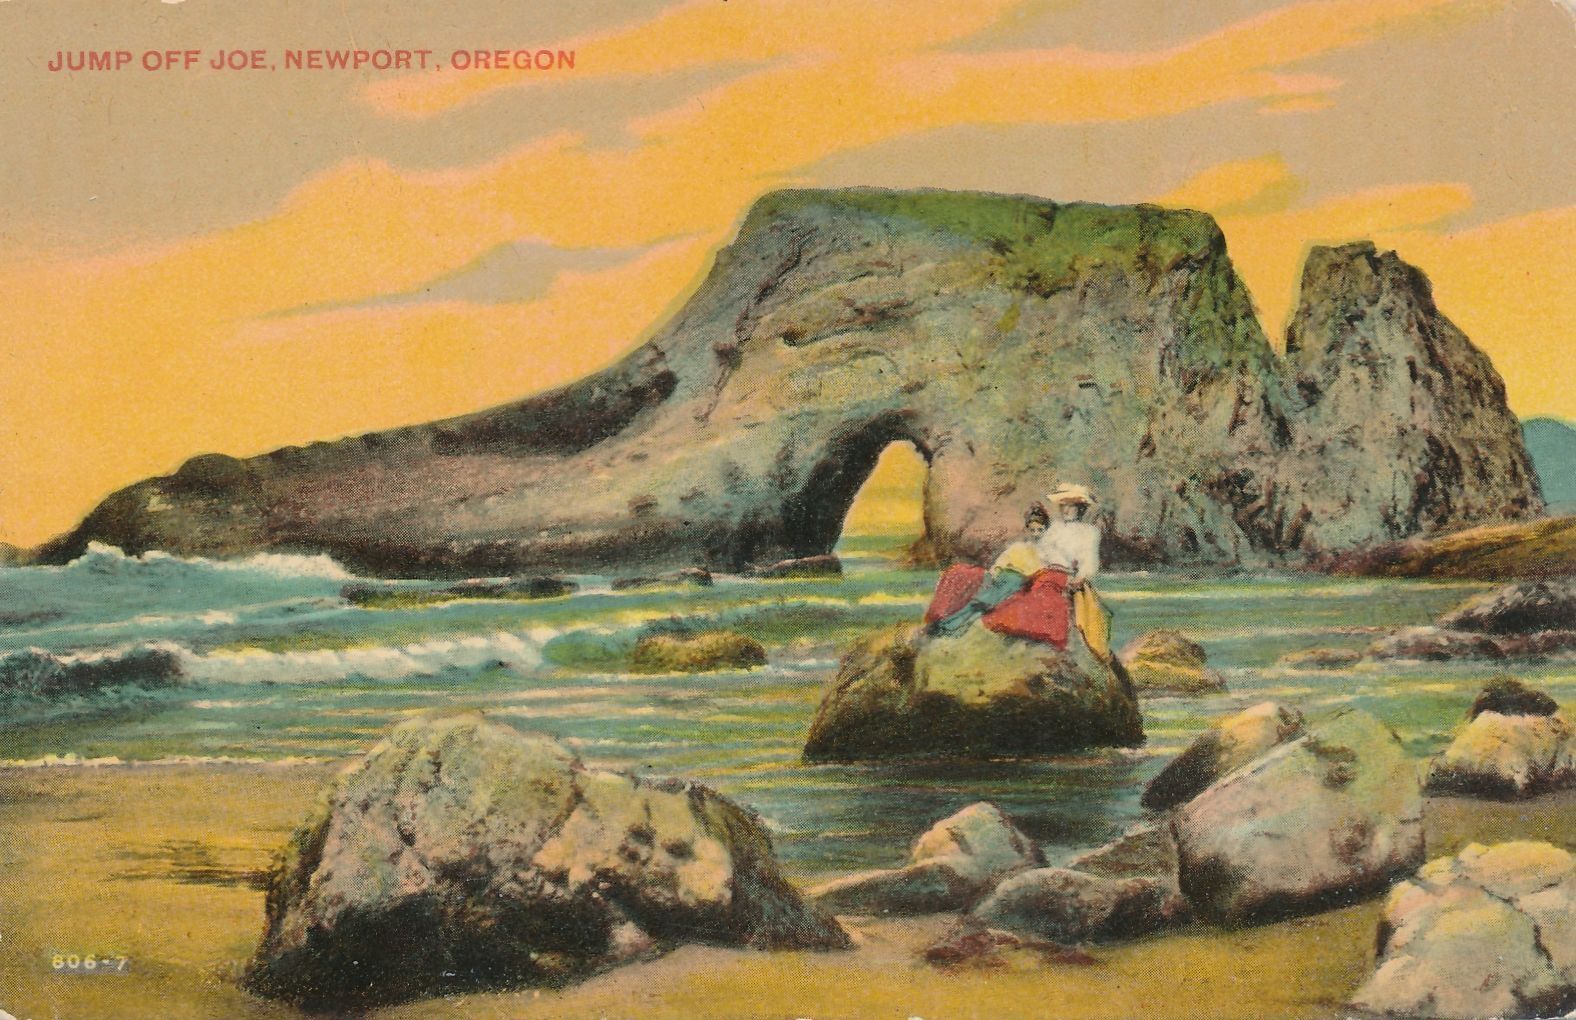 NEWPORT OR - Jump Off Joe Postcard